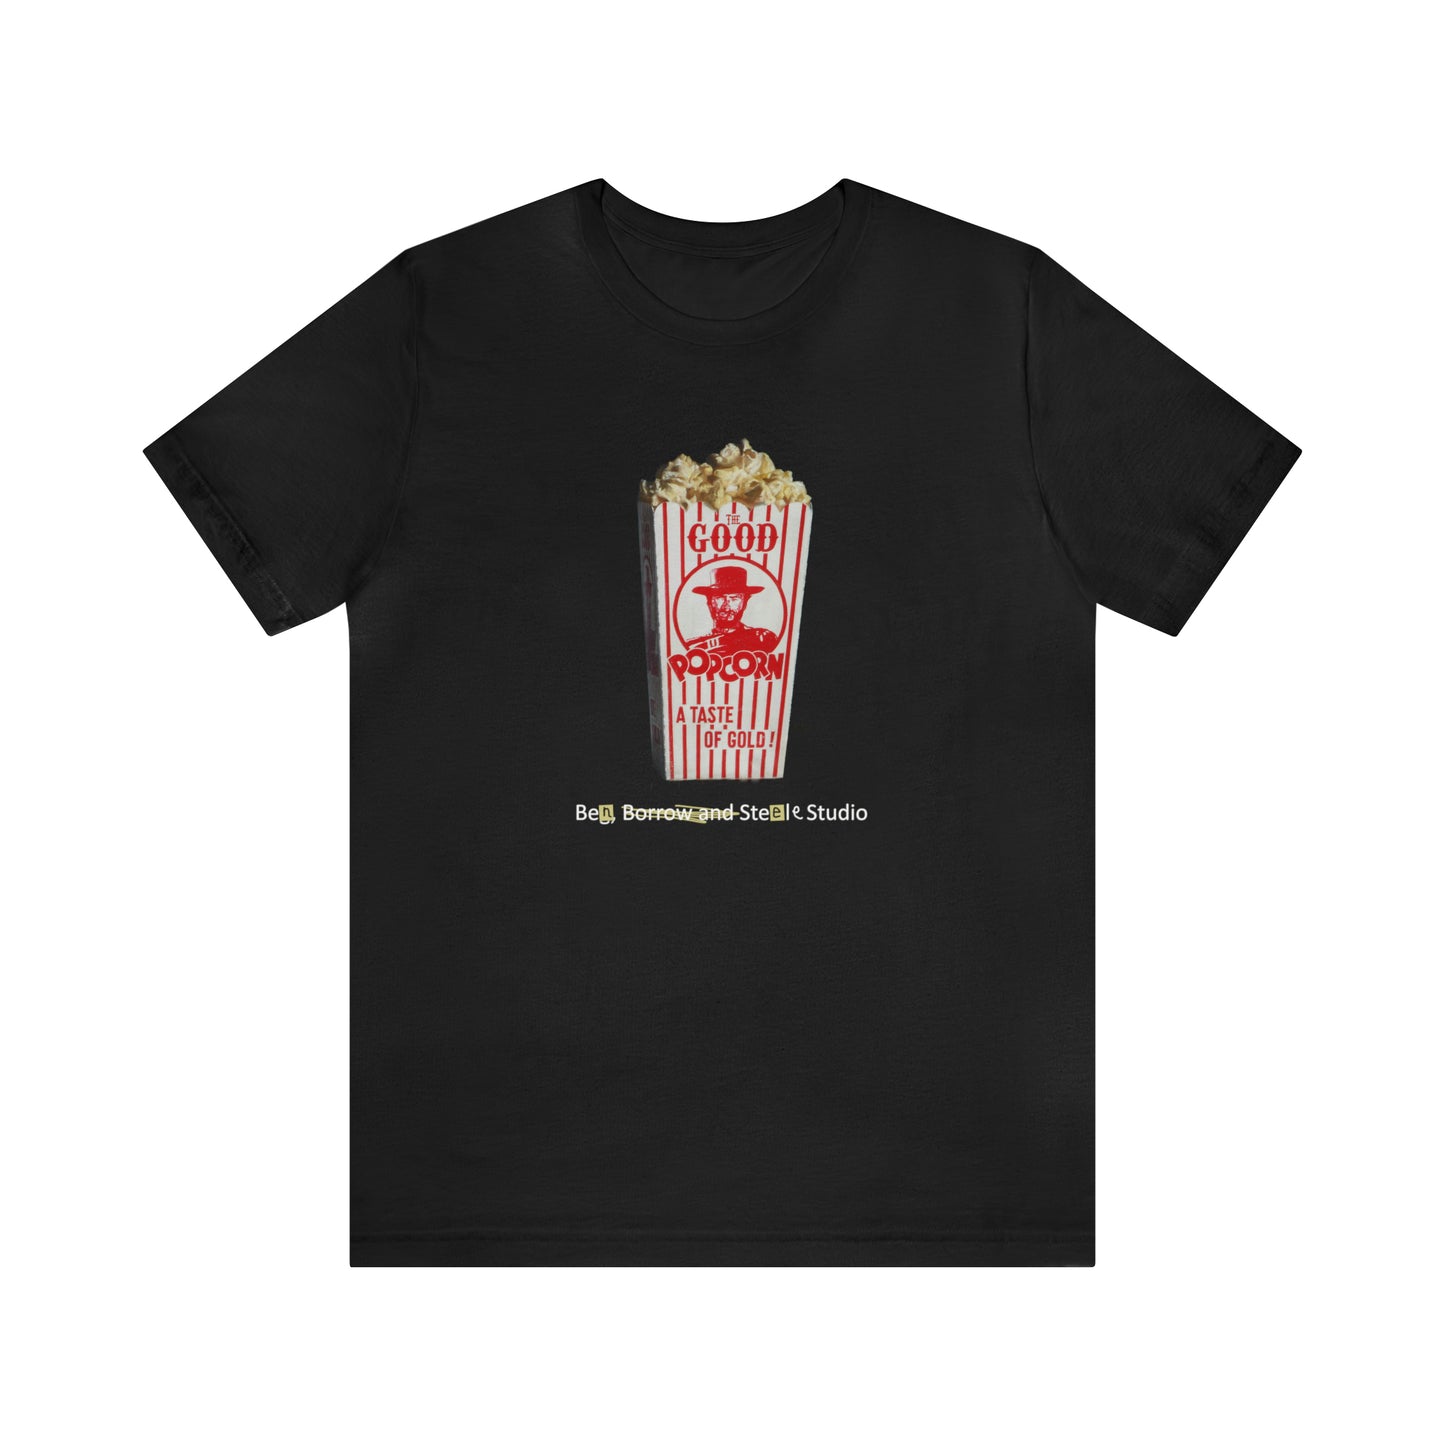 The Good Popcorn Cotton T-shirt